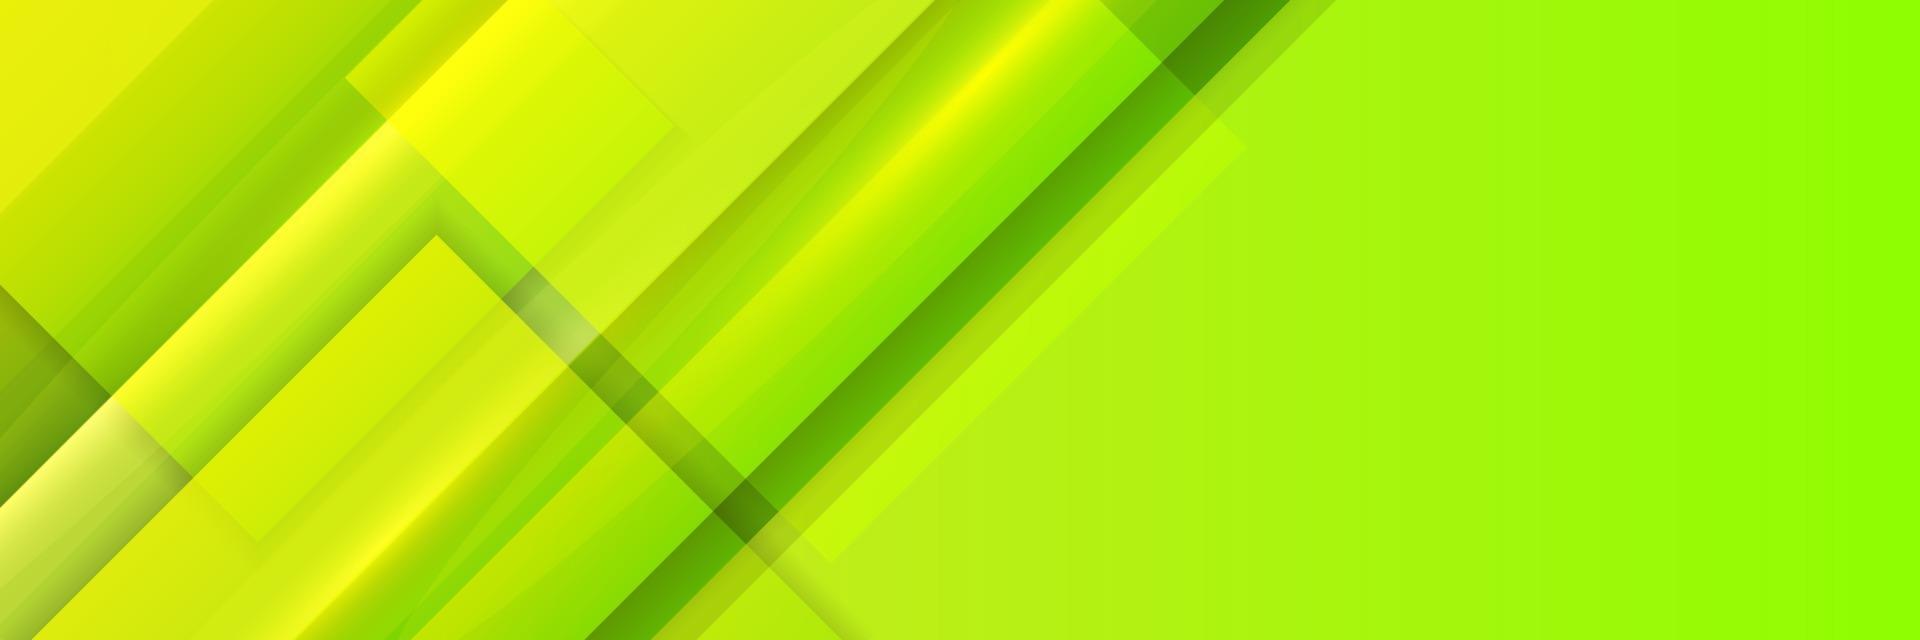 abstracte groene geometrische bannerachtergrond vector